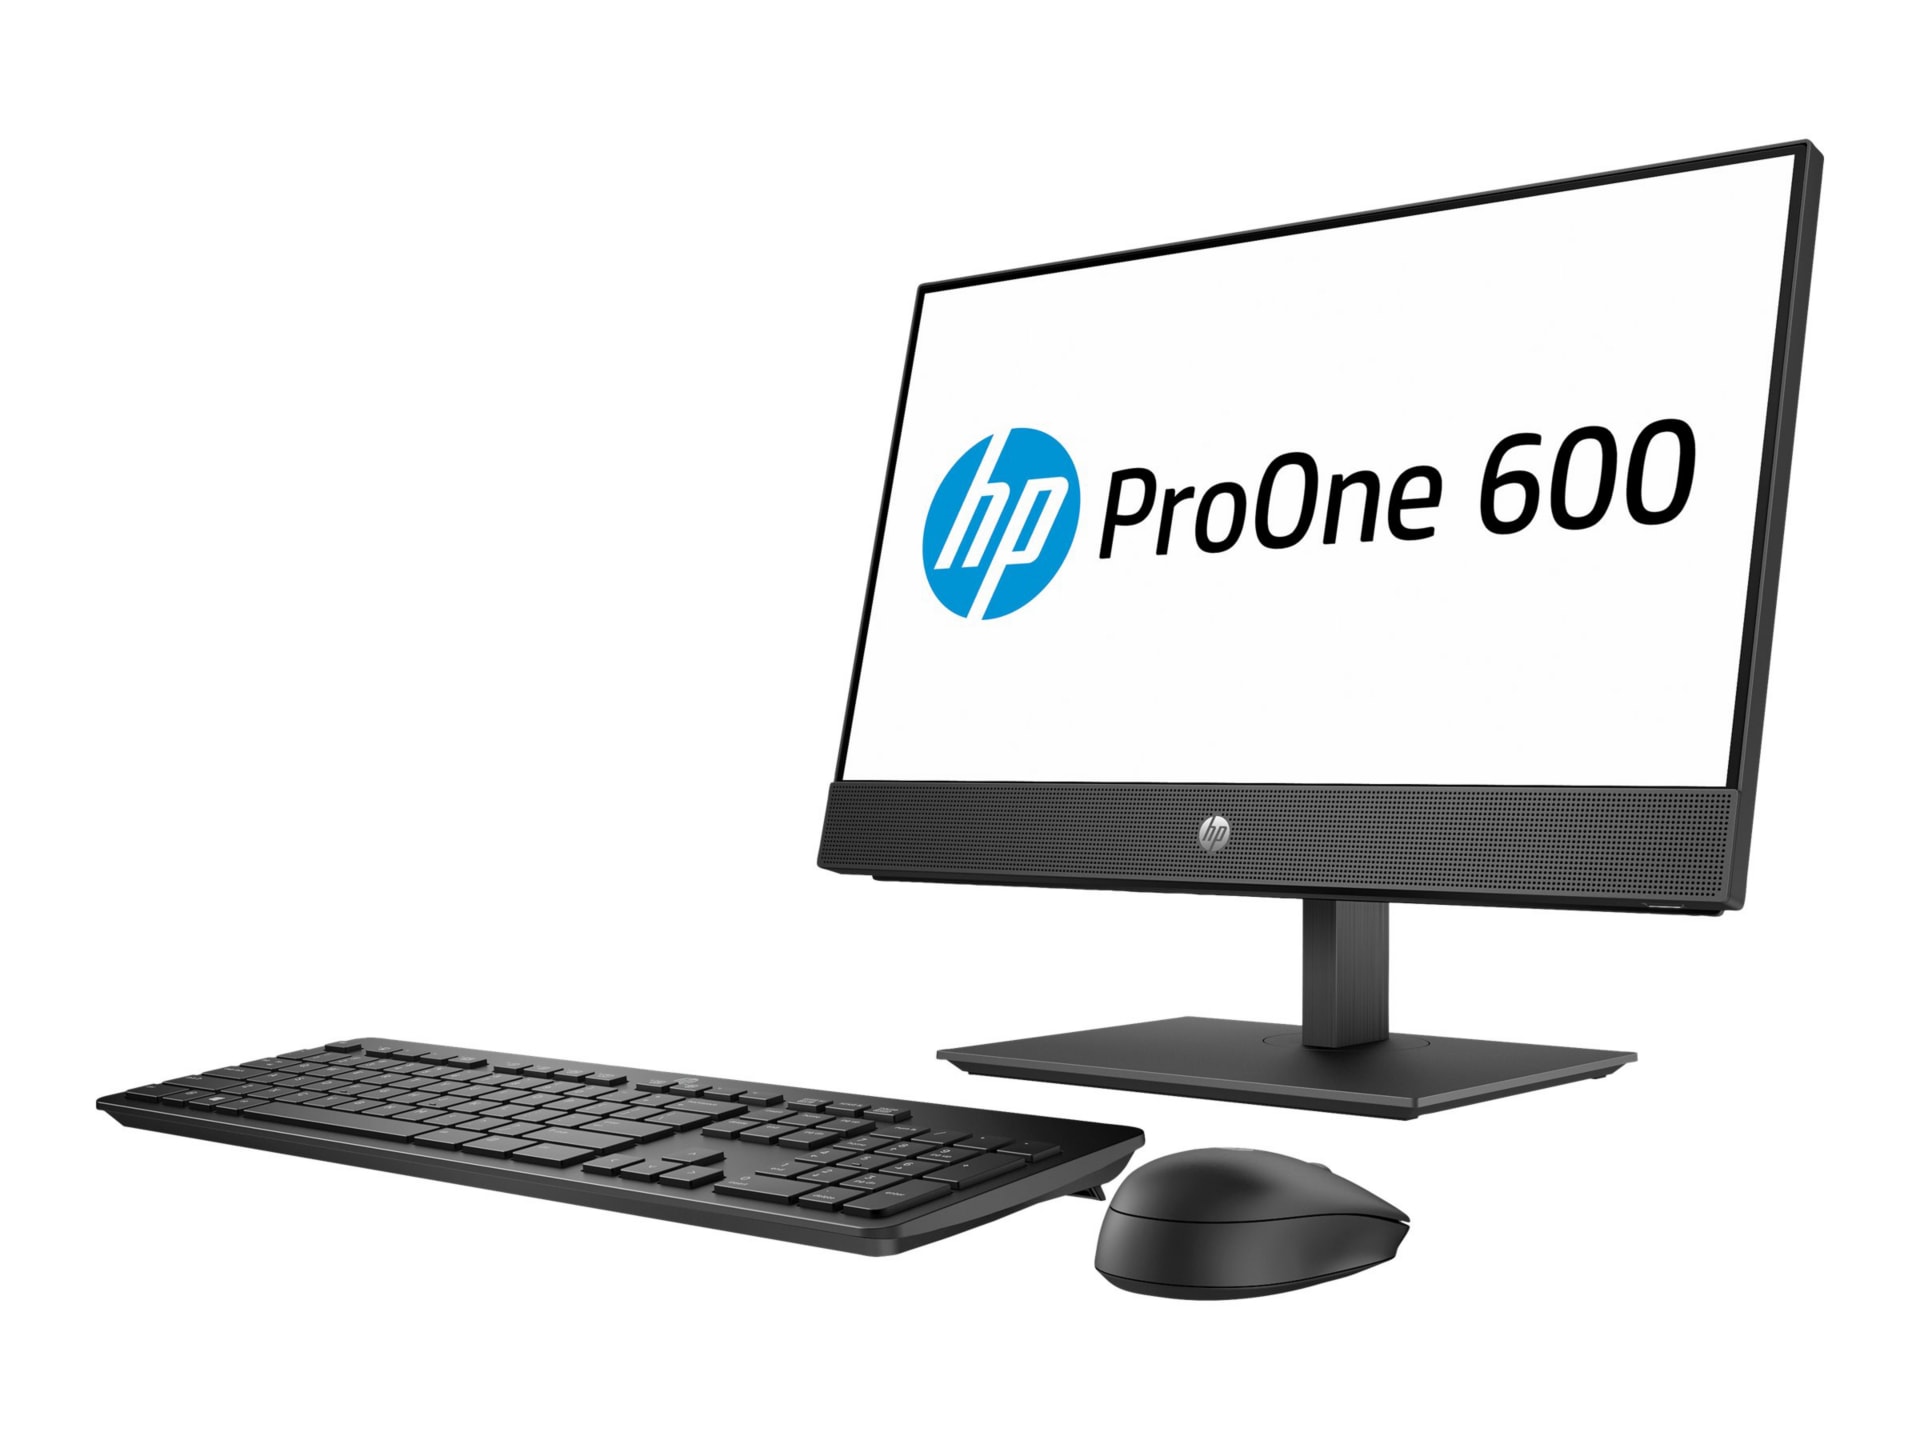 HP SB ProOne 600 G4 AiO 21.5" Core i3-8100 4GB RAM 500GB Win 10 Pro - Touch